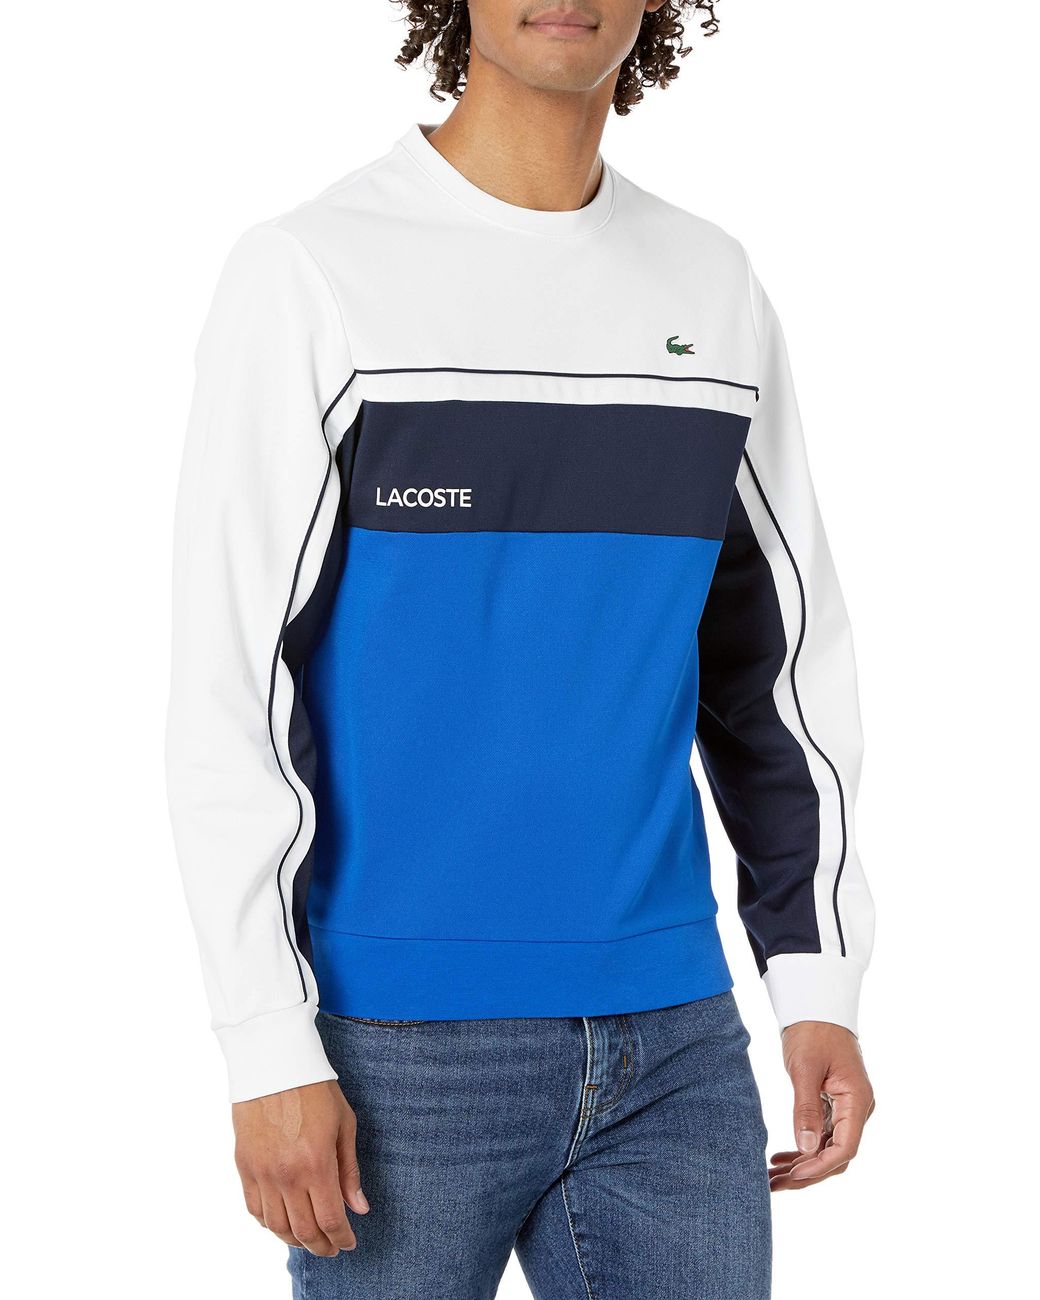 Lacoste Sport Colorblock Crewneck Sweatshirt in Blue for Men - Lyst